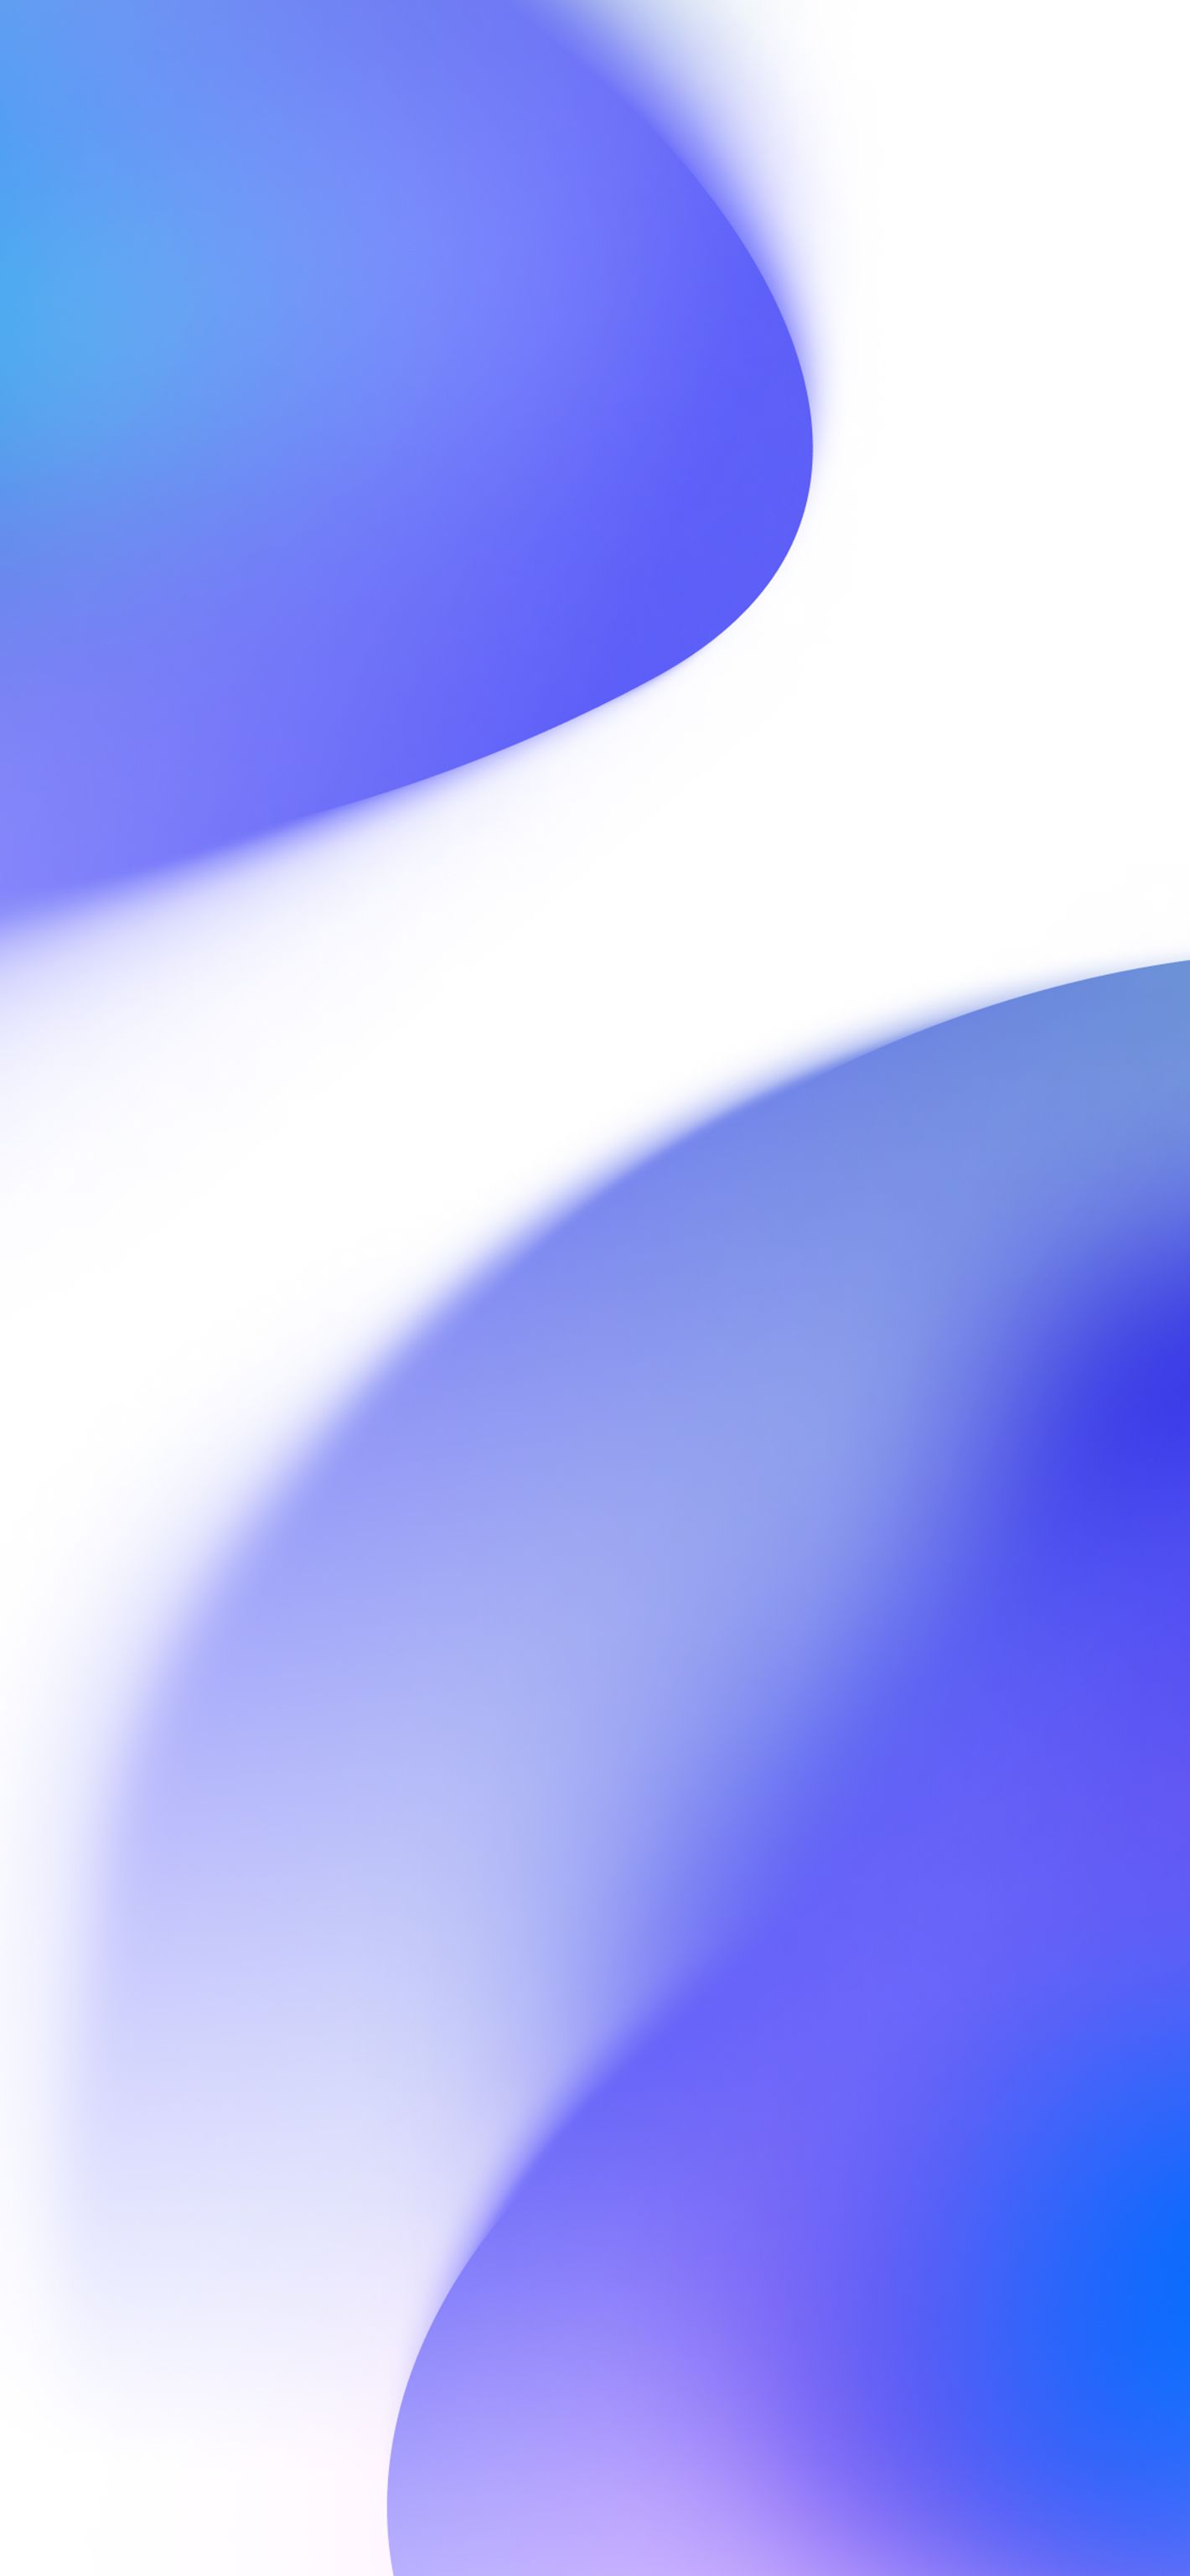 iOS Concept Wallpaper Blue Light Iphone wallpaper logo